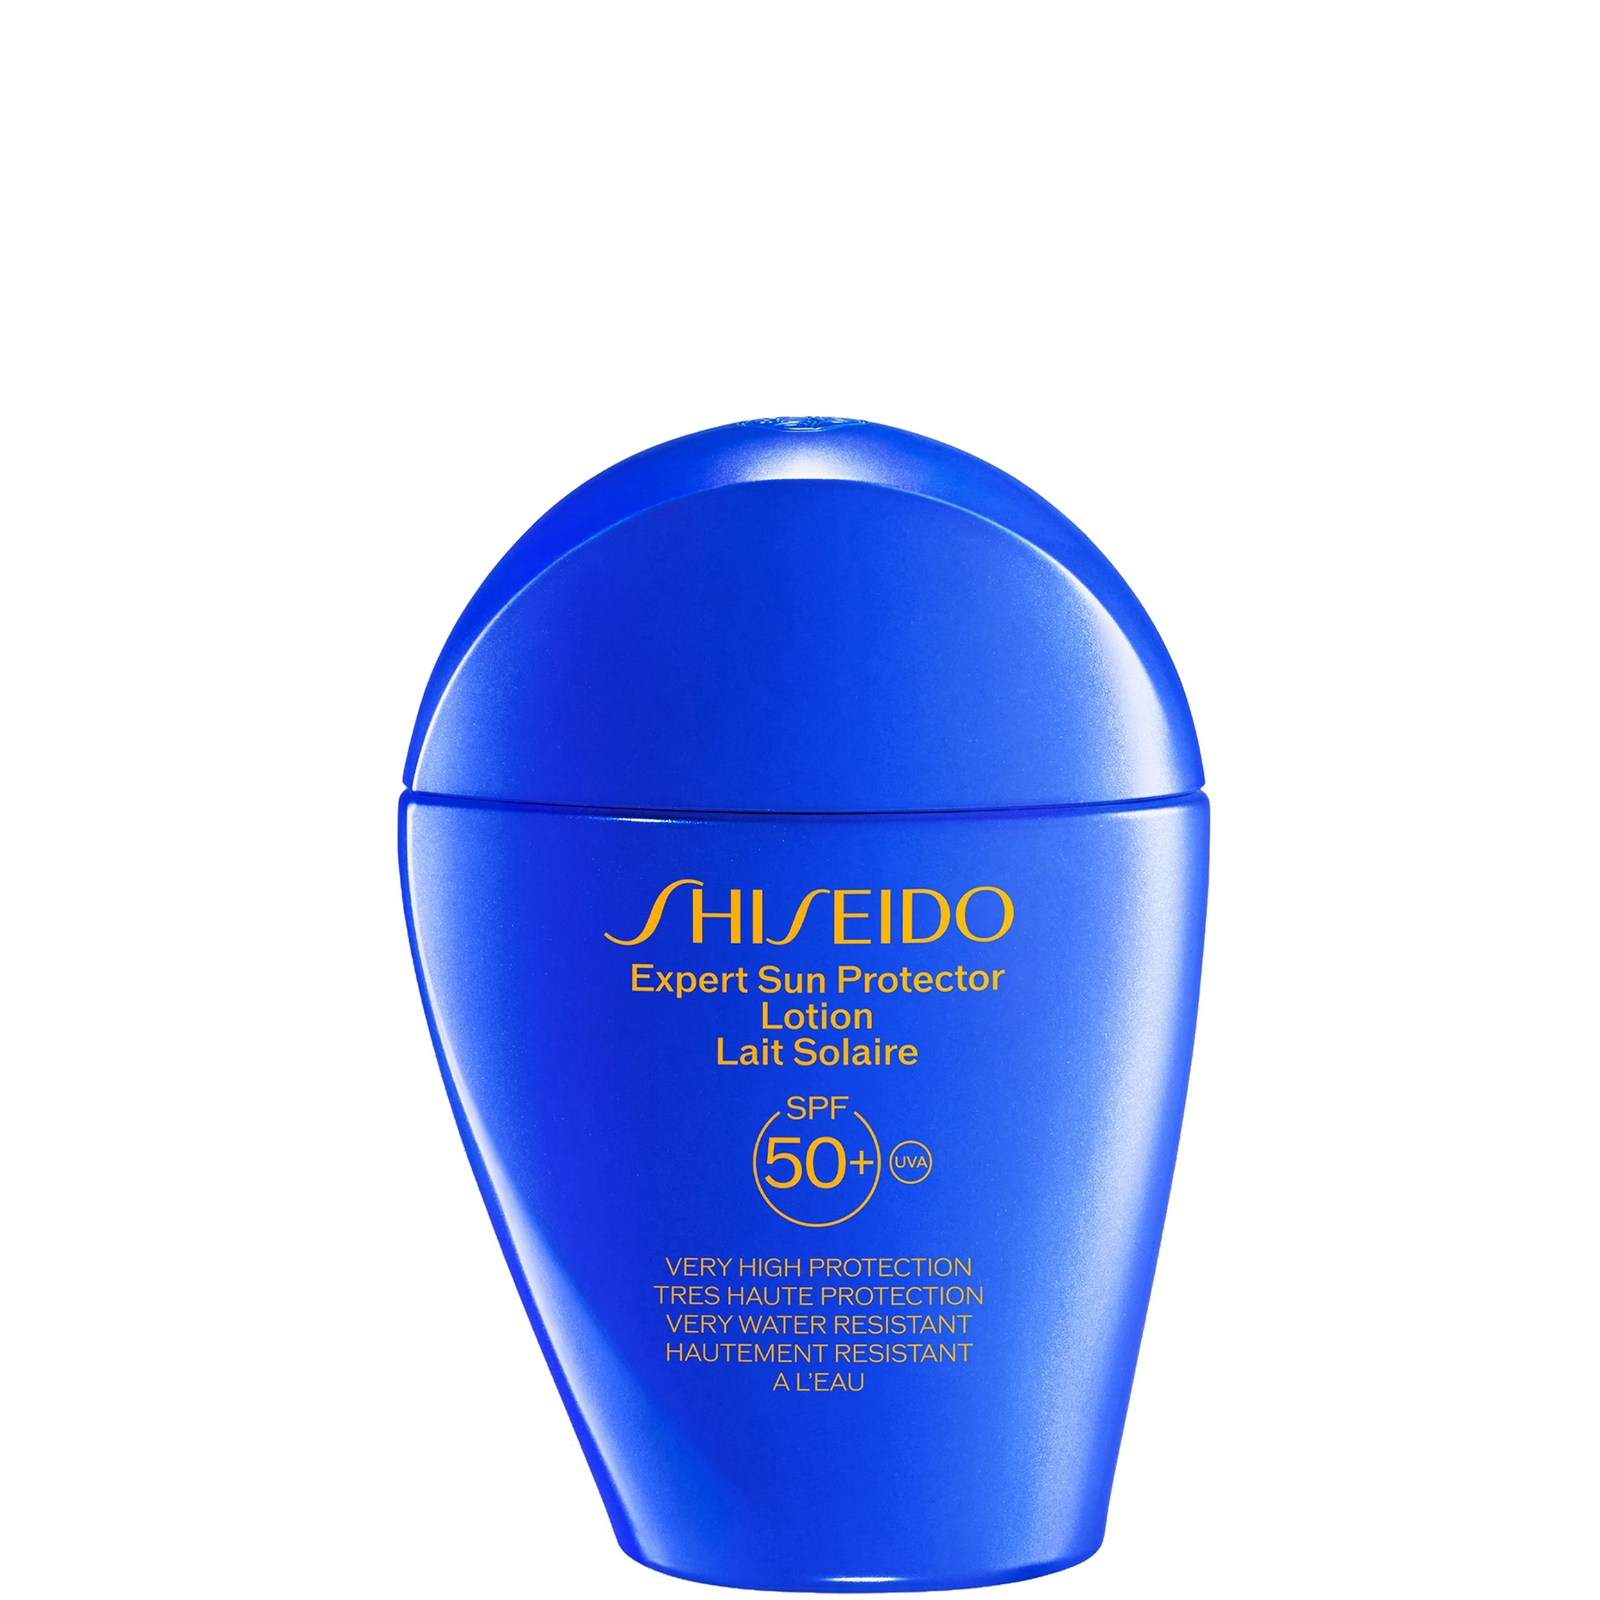 Shiseido Expert Sun Protector Lotion Spf50   - Suncare Expert Sun Protector Lotion Spf50+